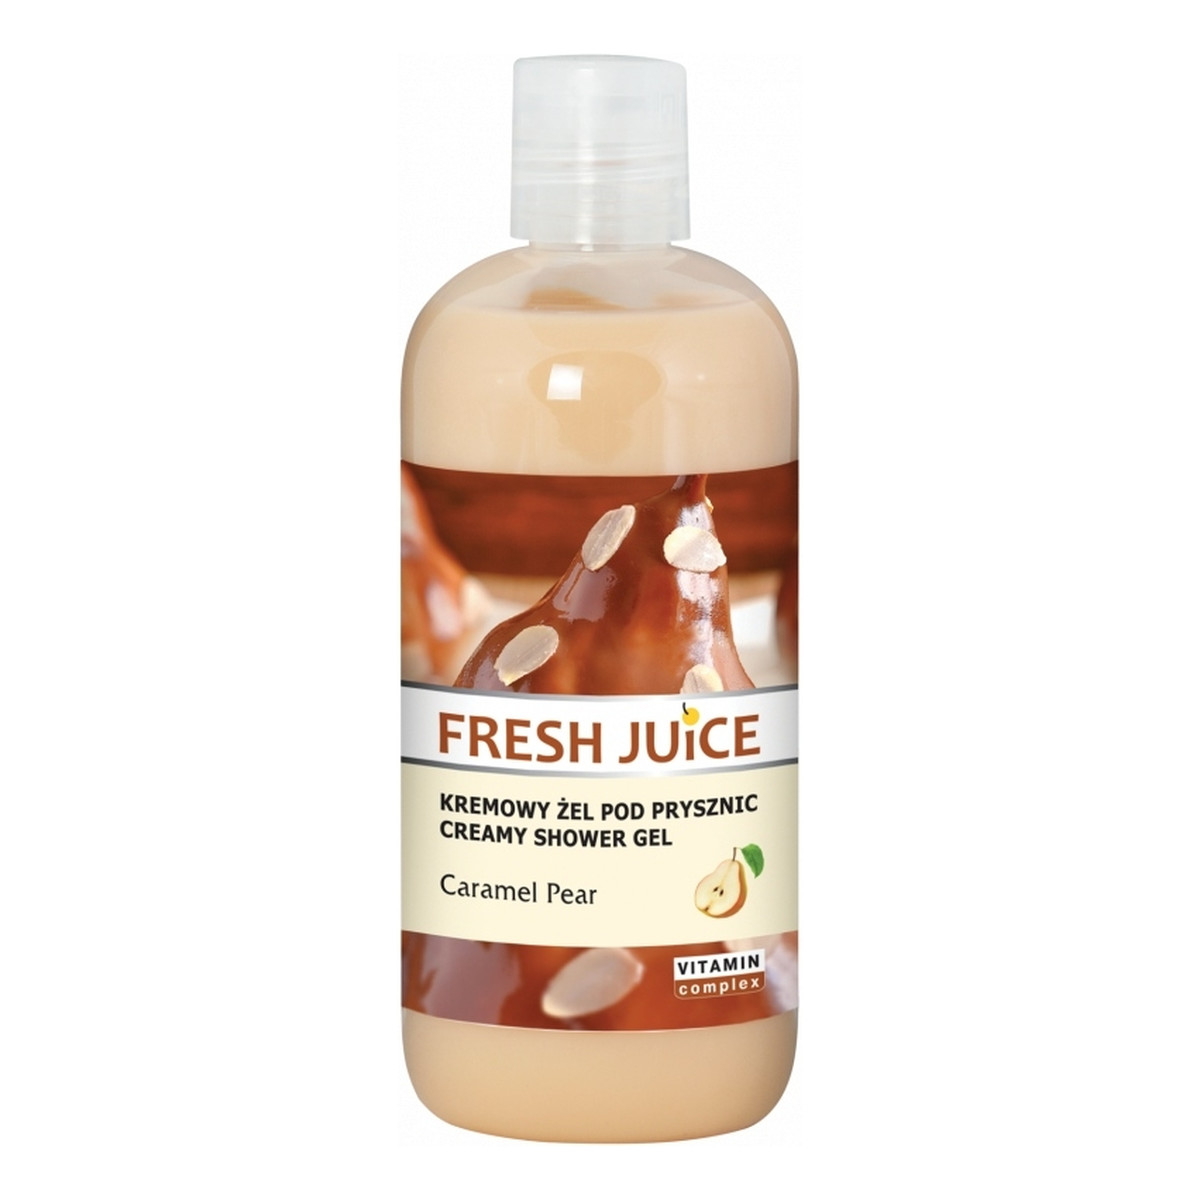 Fresh Juice Caramel & Pear kremowy żel pod prysznic 500ml